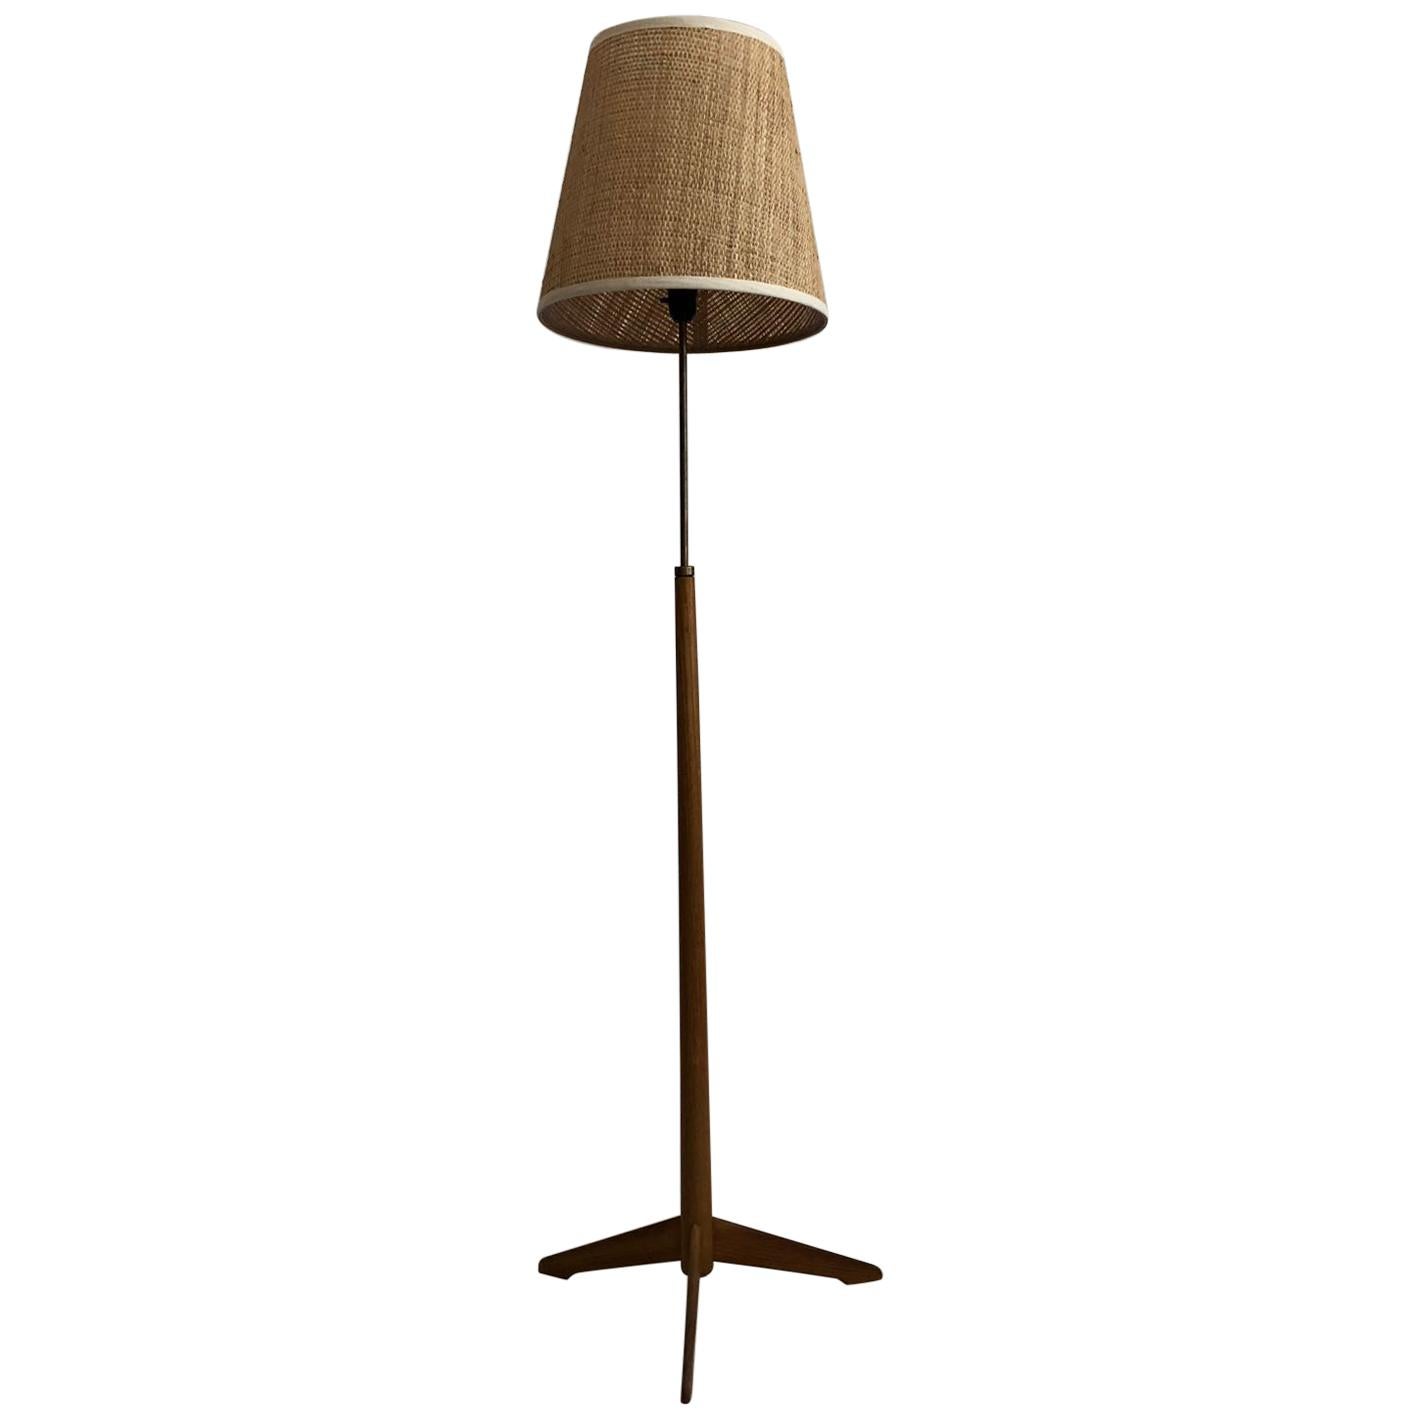 Scandinavian Modern Floor Lamp with Wooden Stand by Bergboms